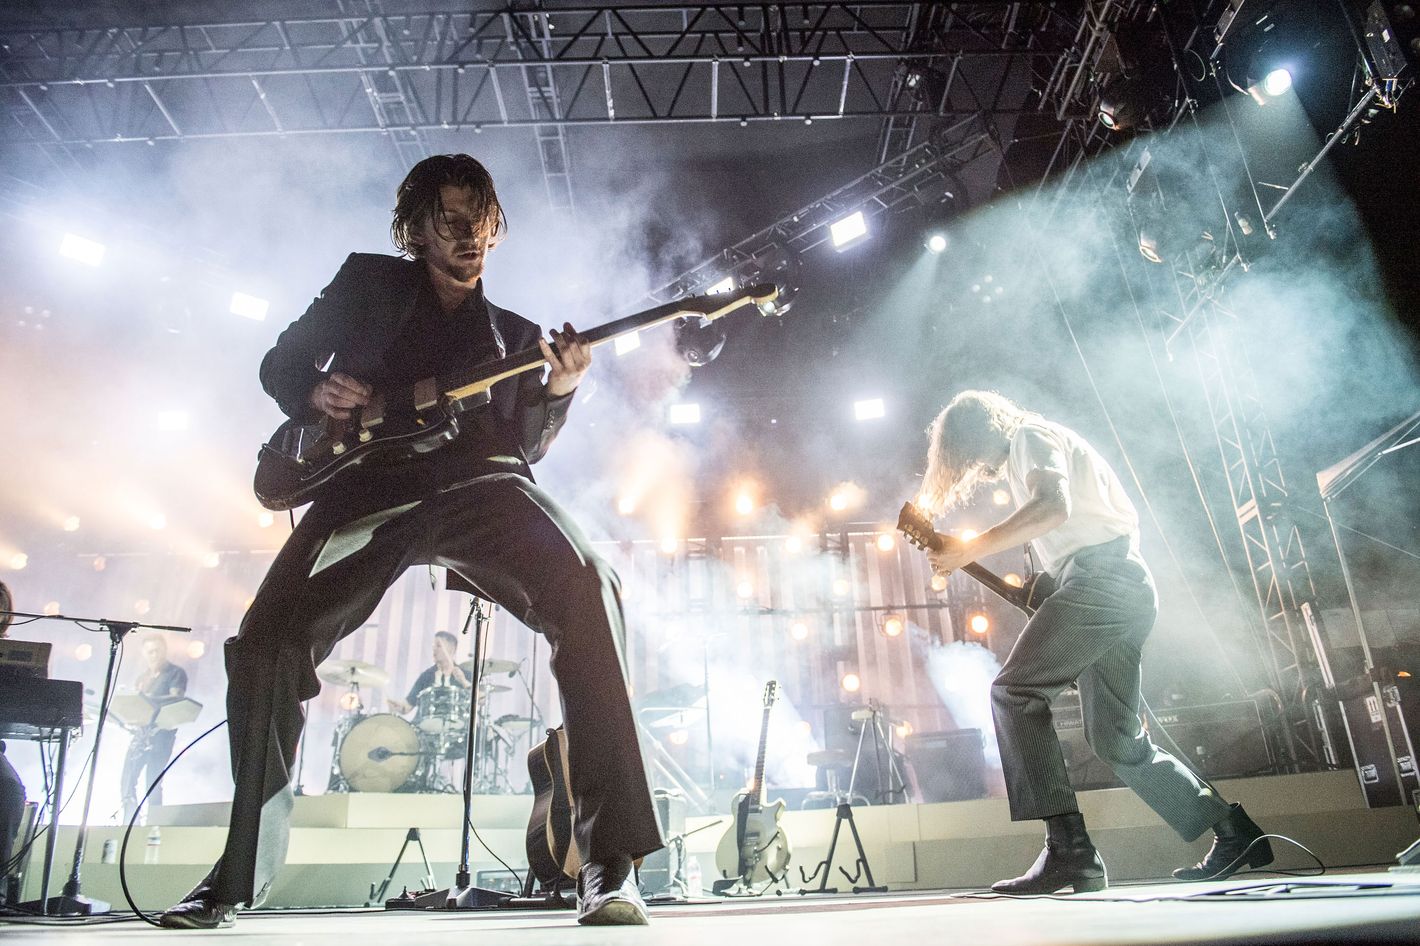 Review: Arctic Monkeys Tranquility Base Hotel & Casino Album